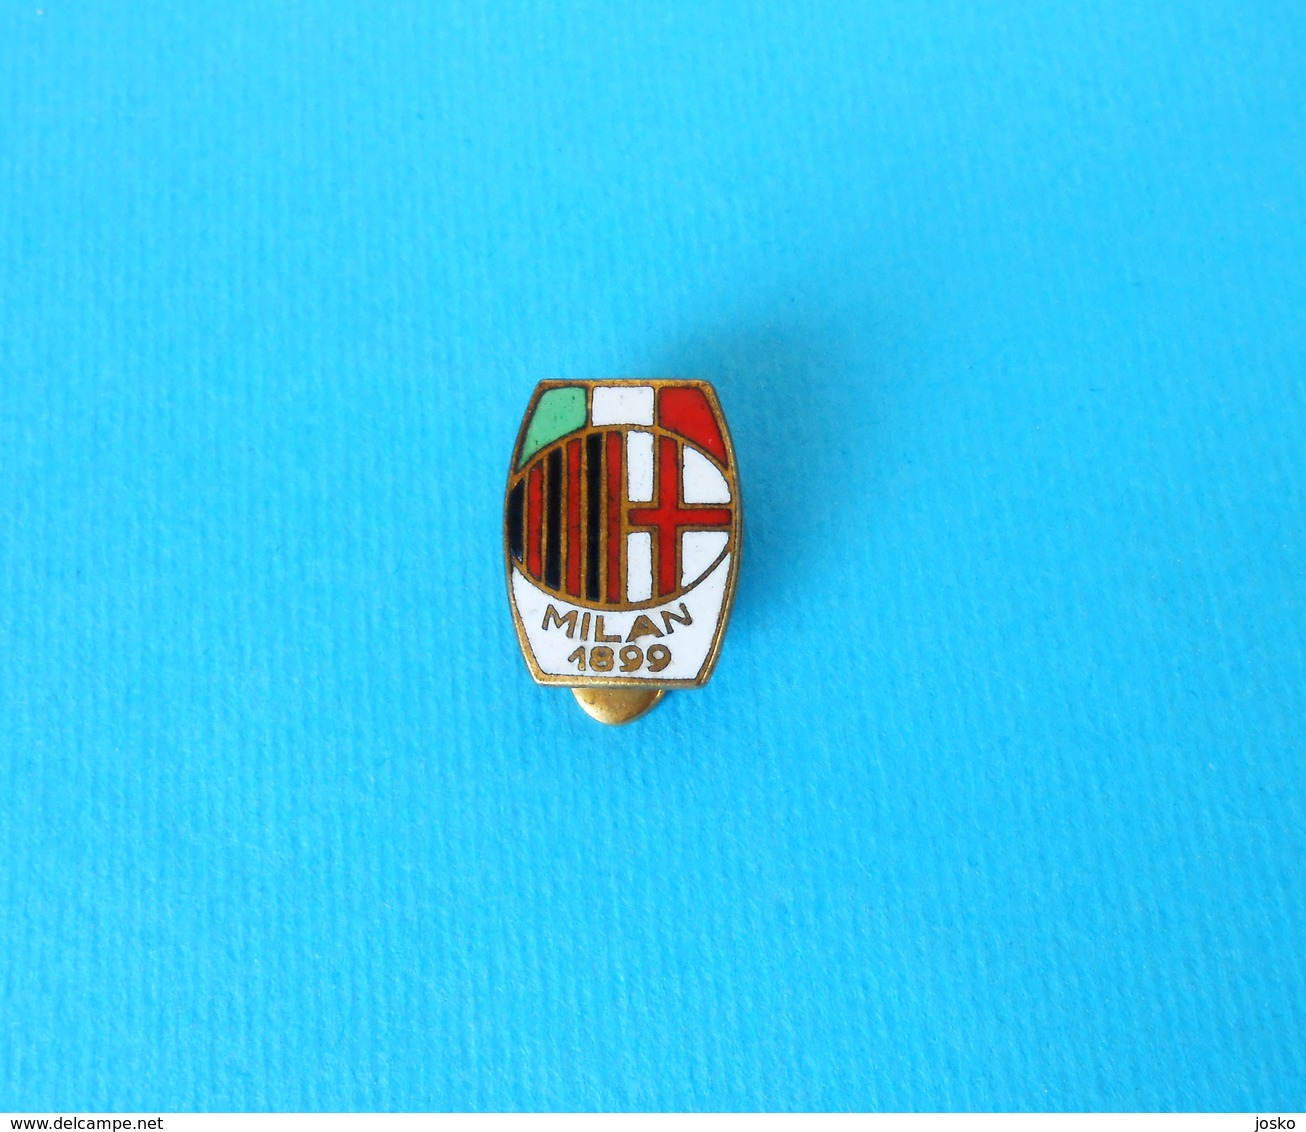 AC MILAN - Italy Football Soccer Club Old Enamel Buttonhole Pin Badge Fussball Futbol Calcio Distintivo Italia Spilla - Football